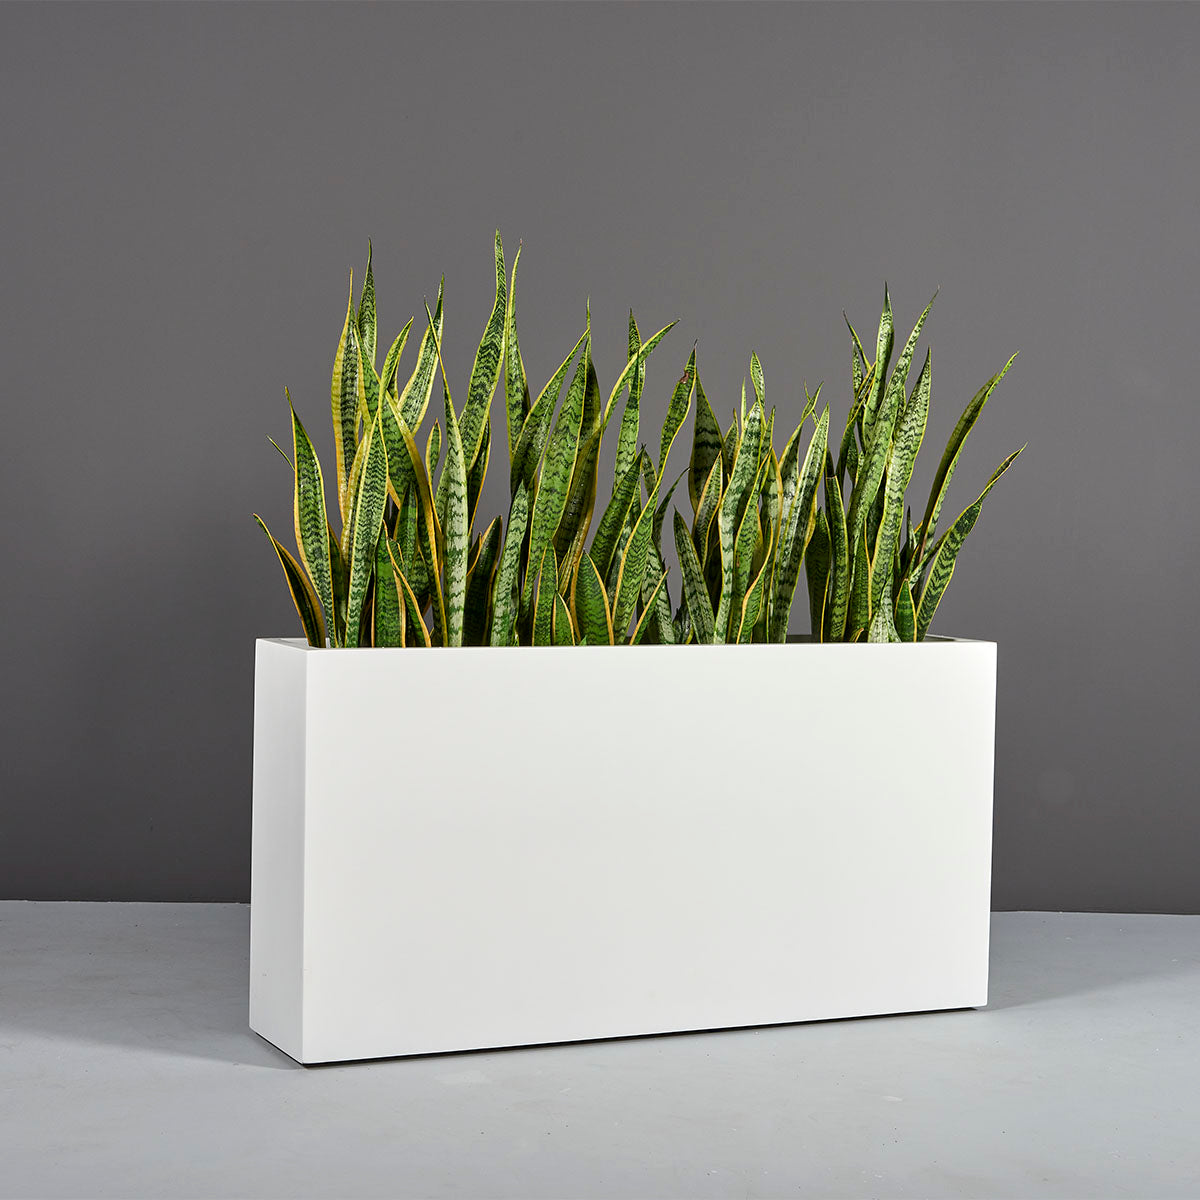 Jay Scotts Milano Fiberglass Rectangular Planter Box - Size 36"L x 10"W x 24"H